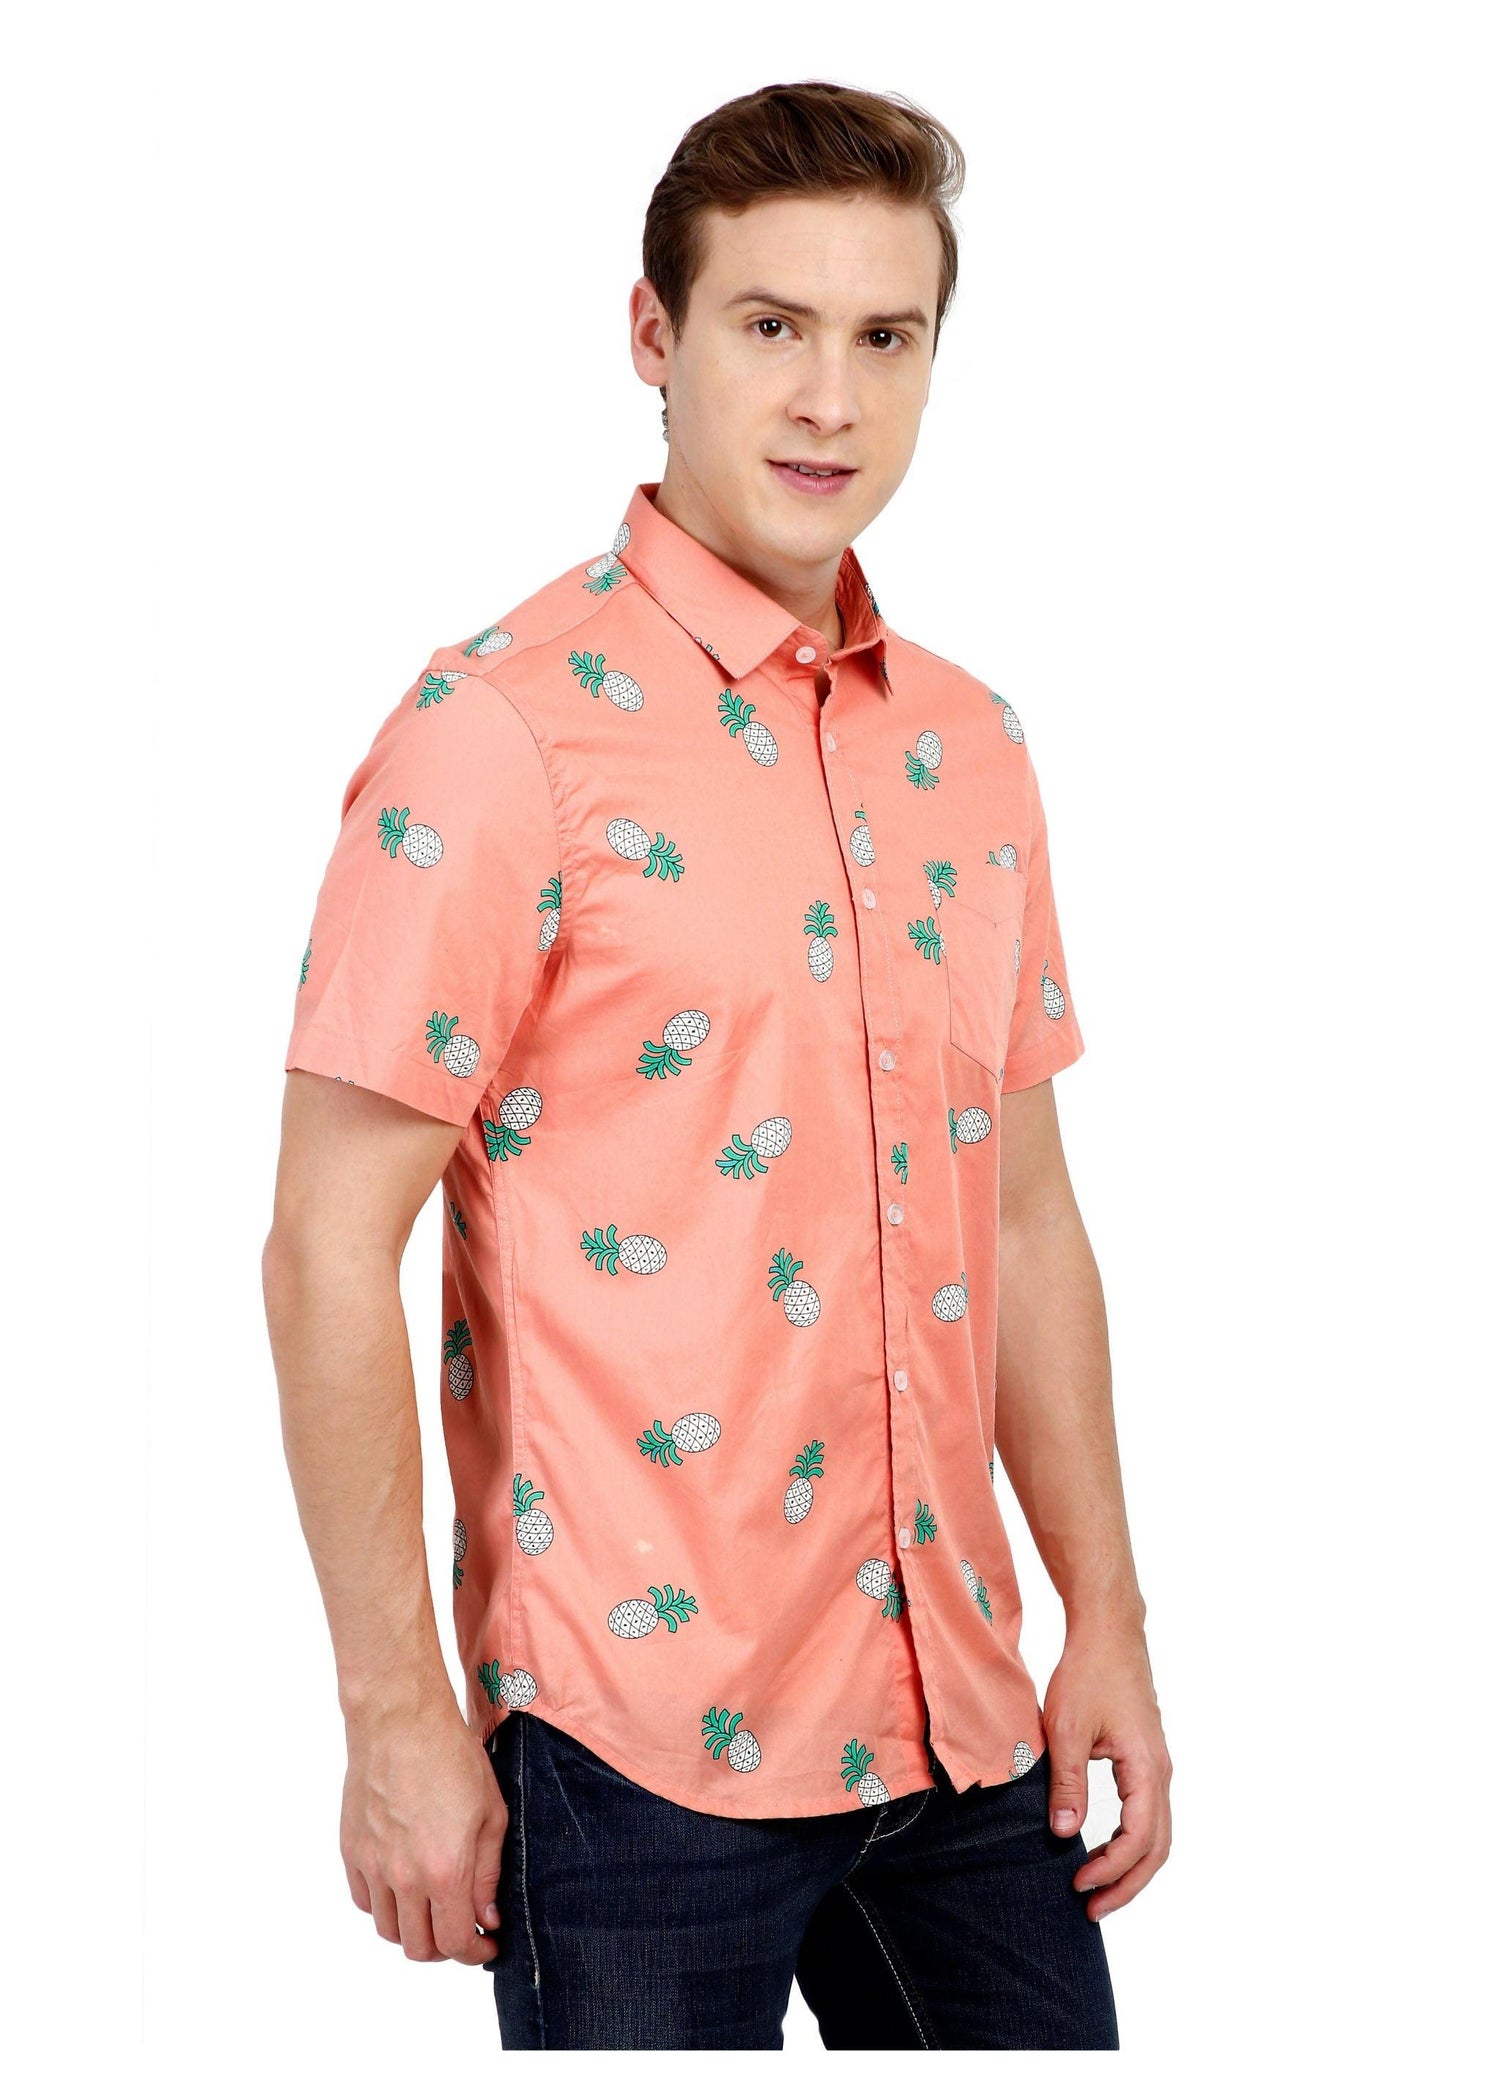 Tusok-pink-pineappleFeatured Shirt, Vacation-Printed Shirtimage-Peach Pineapple (6)